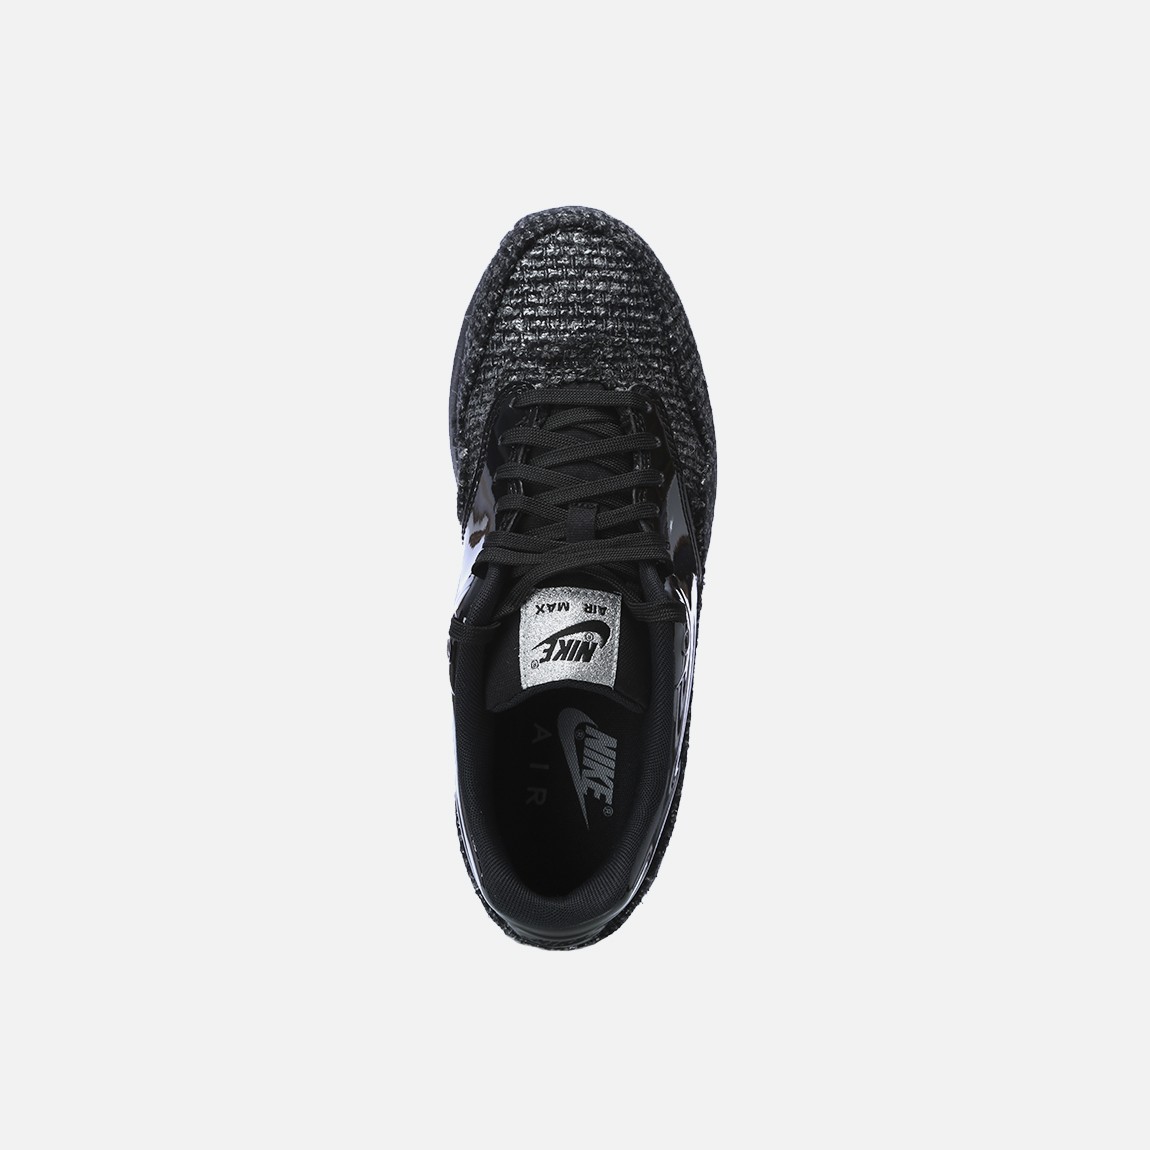 Wmns Air Max 1 VT QS - Black/Black/Metallic Silver Nike Sneakers ...